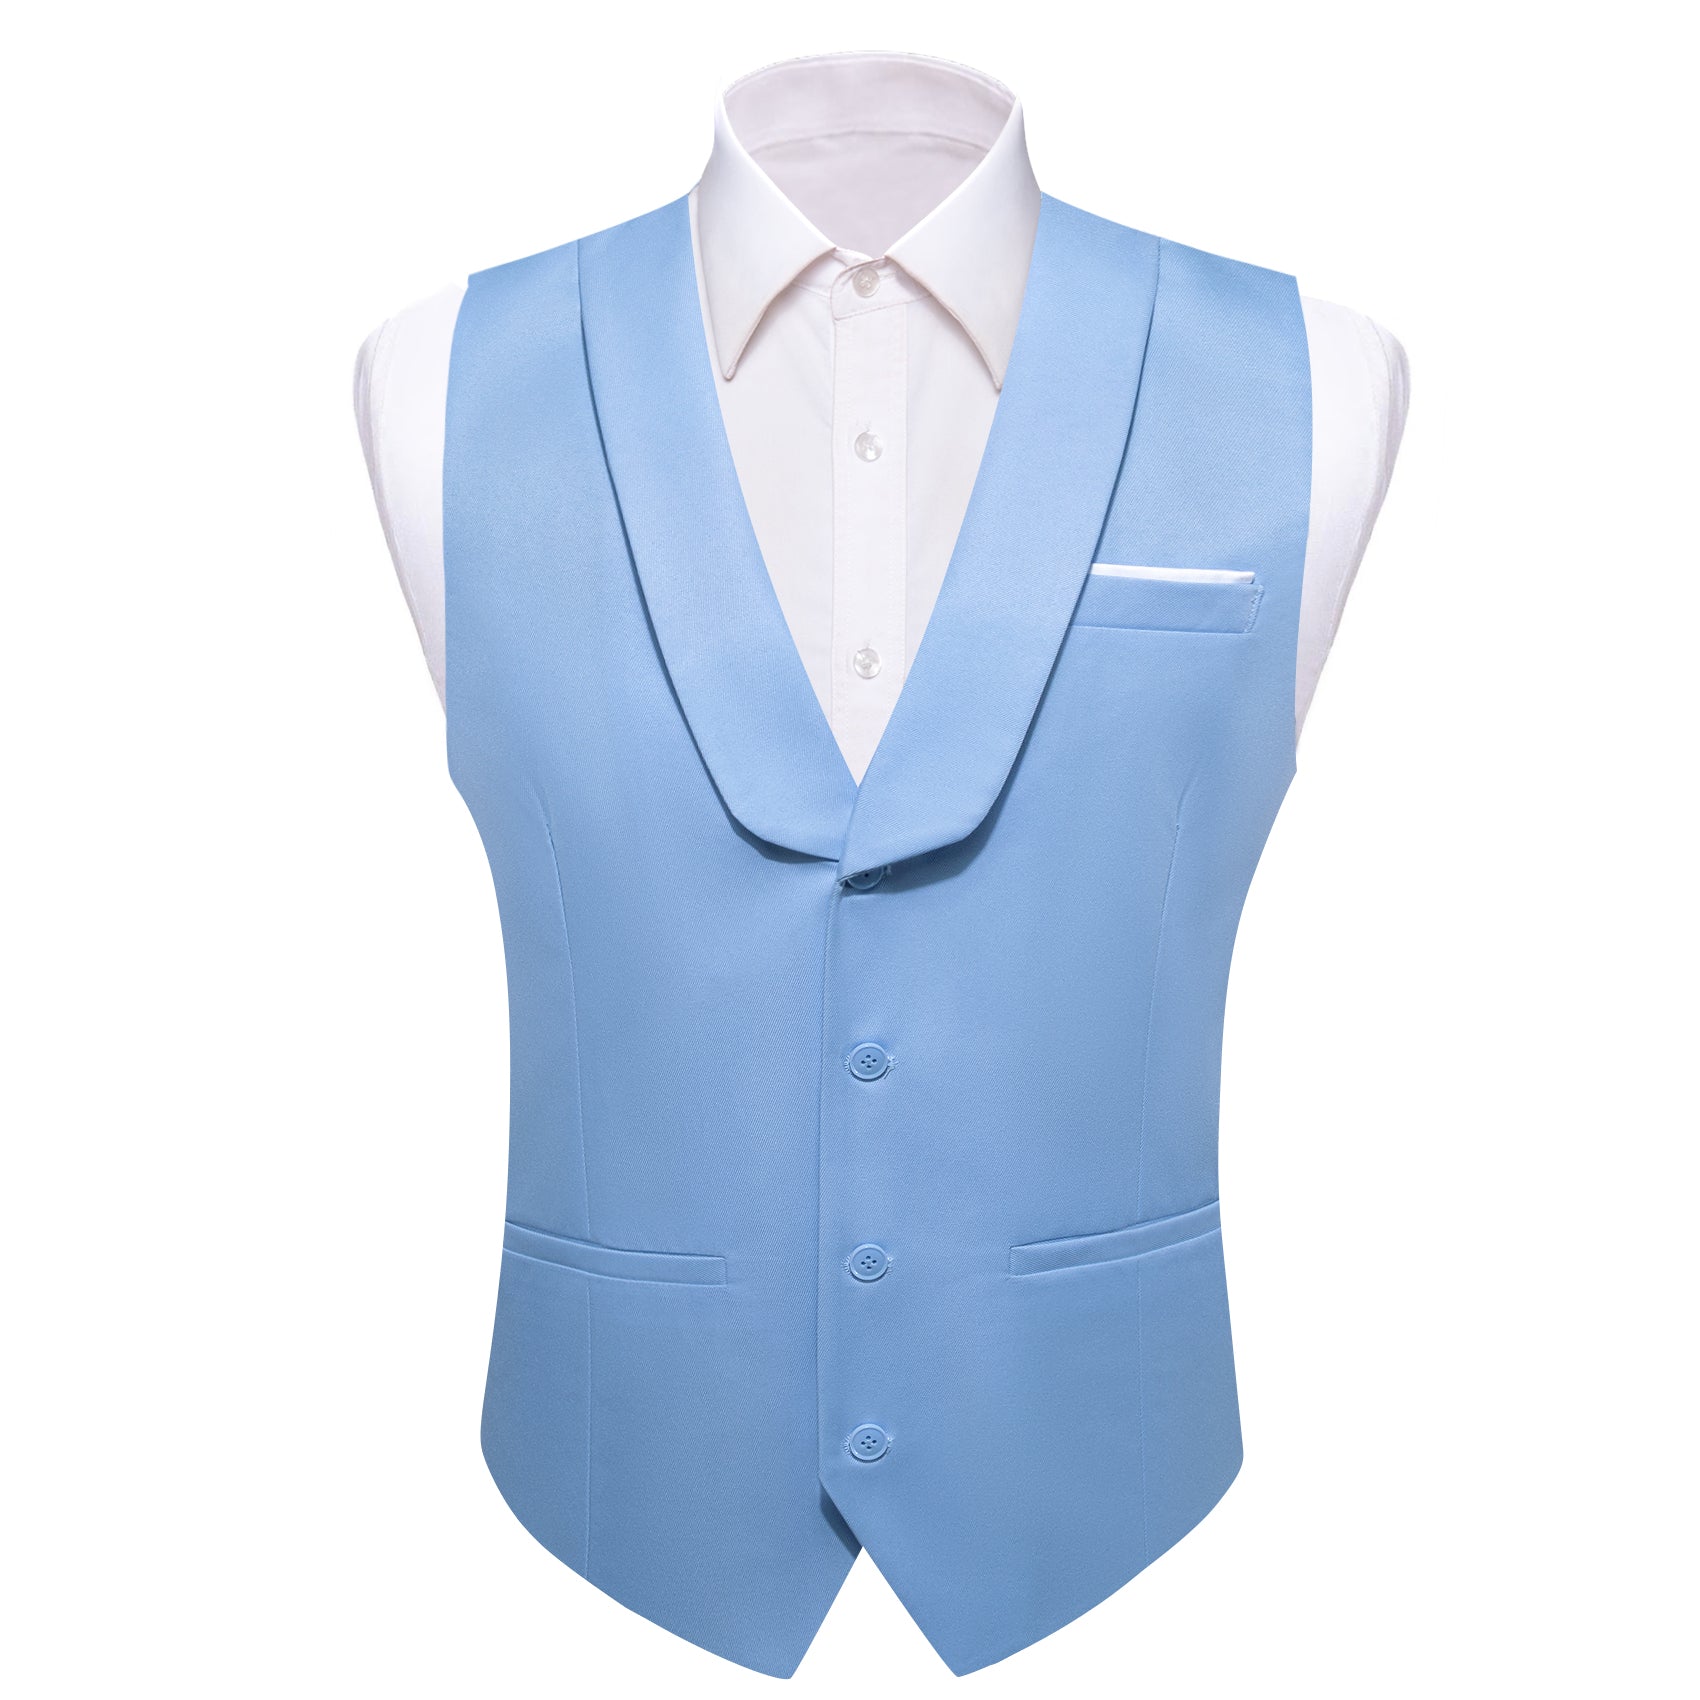 Barry.wang Novetly Sky Blue Solid Vest Waistcoat Set